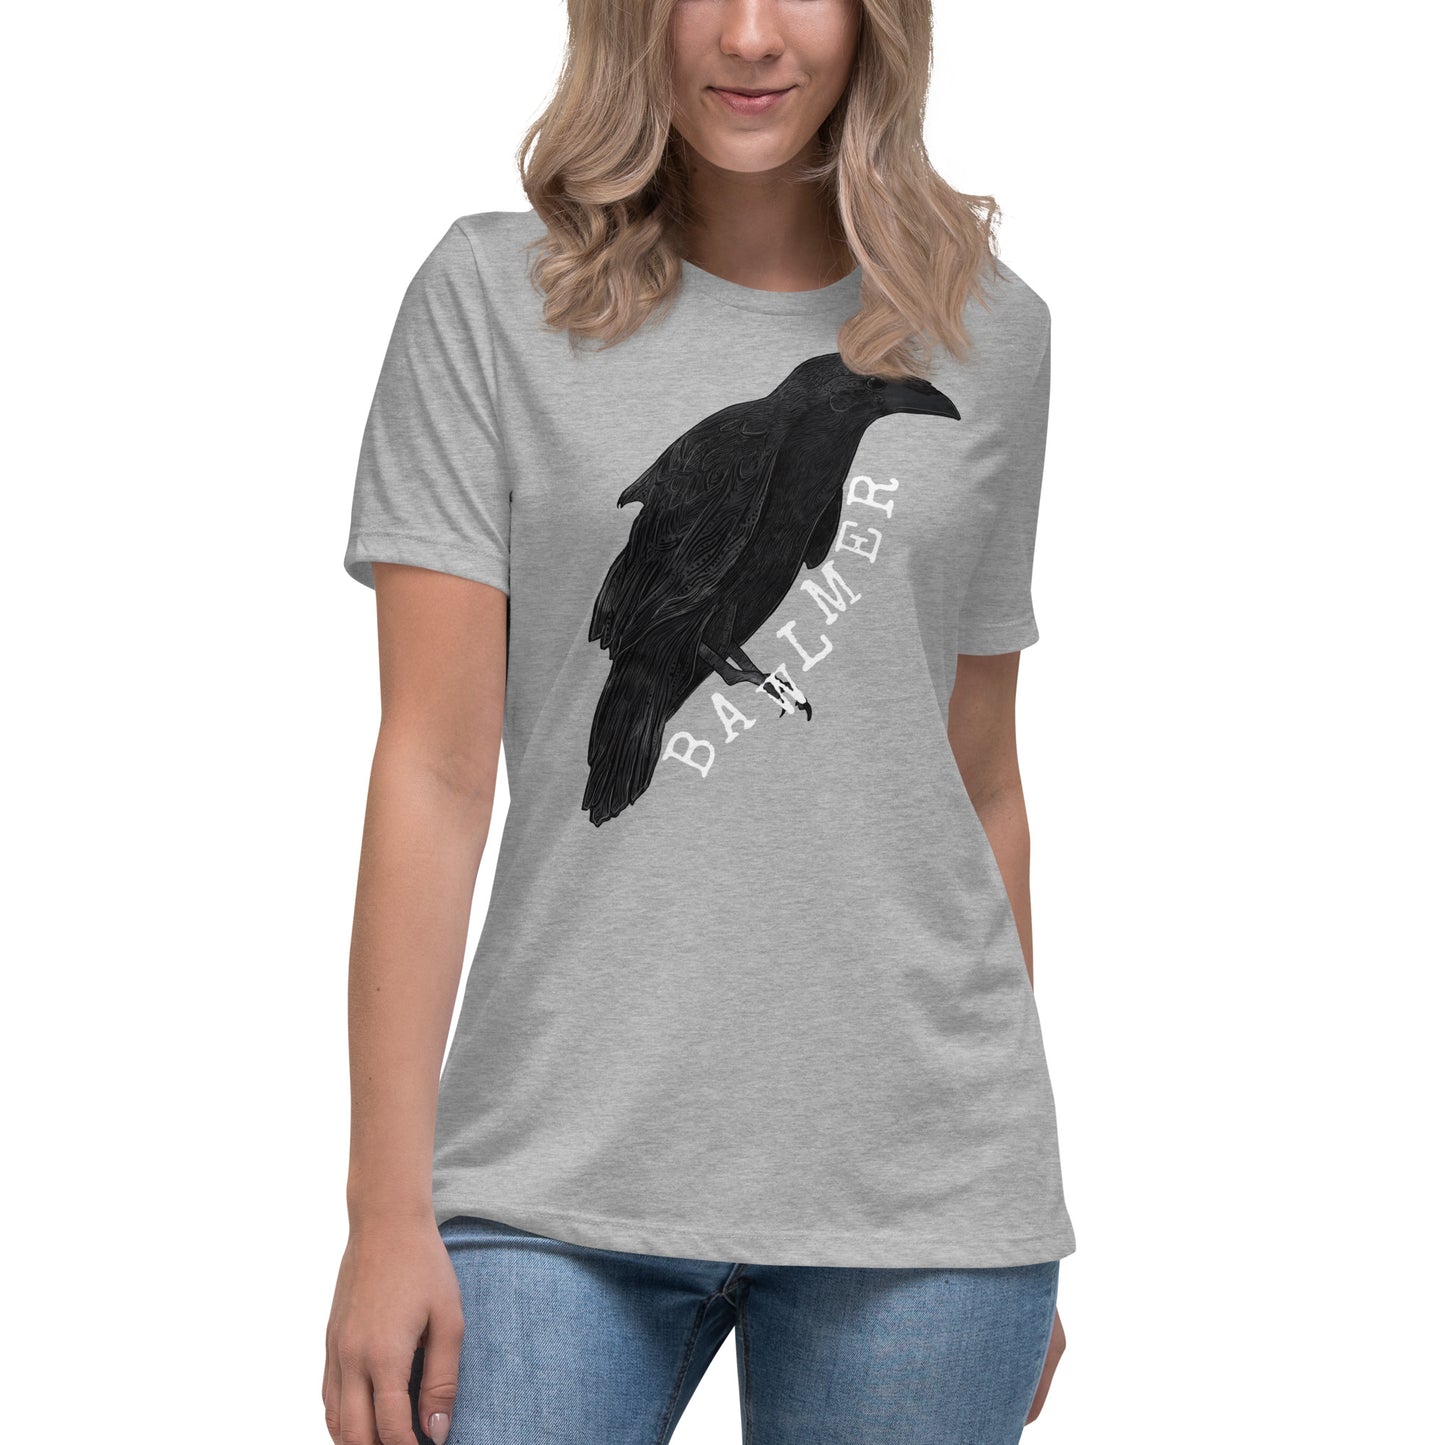 Ravens Bawlmer Shirt (Women's)